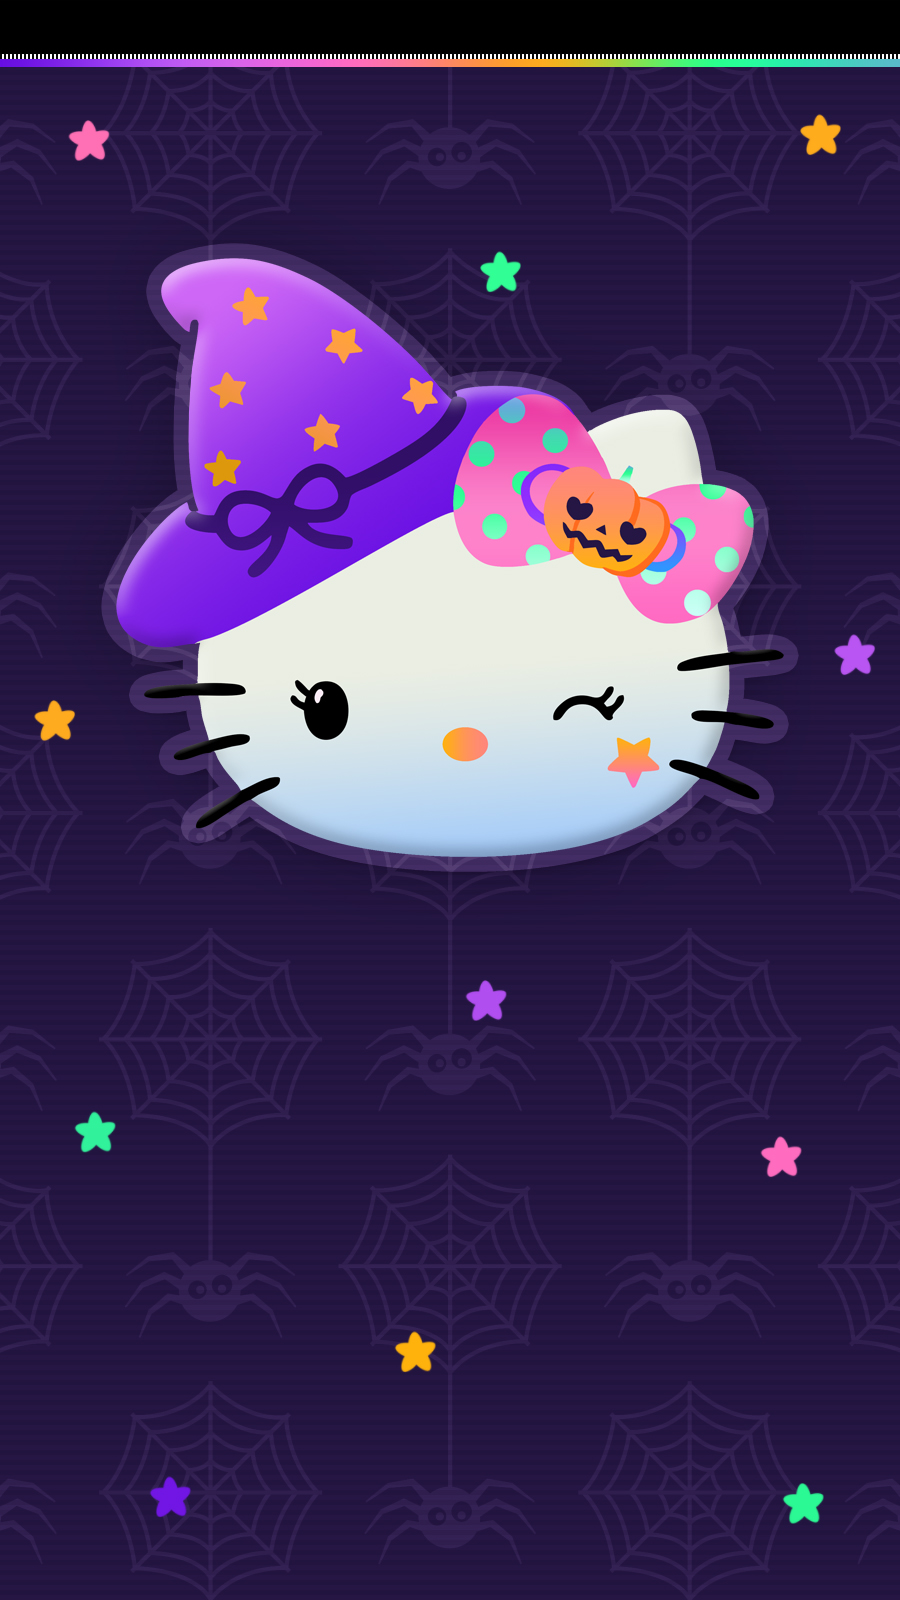 ♡ Cute Walls ♡: Hello kitty Halloween wallpaper set